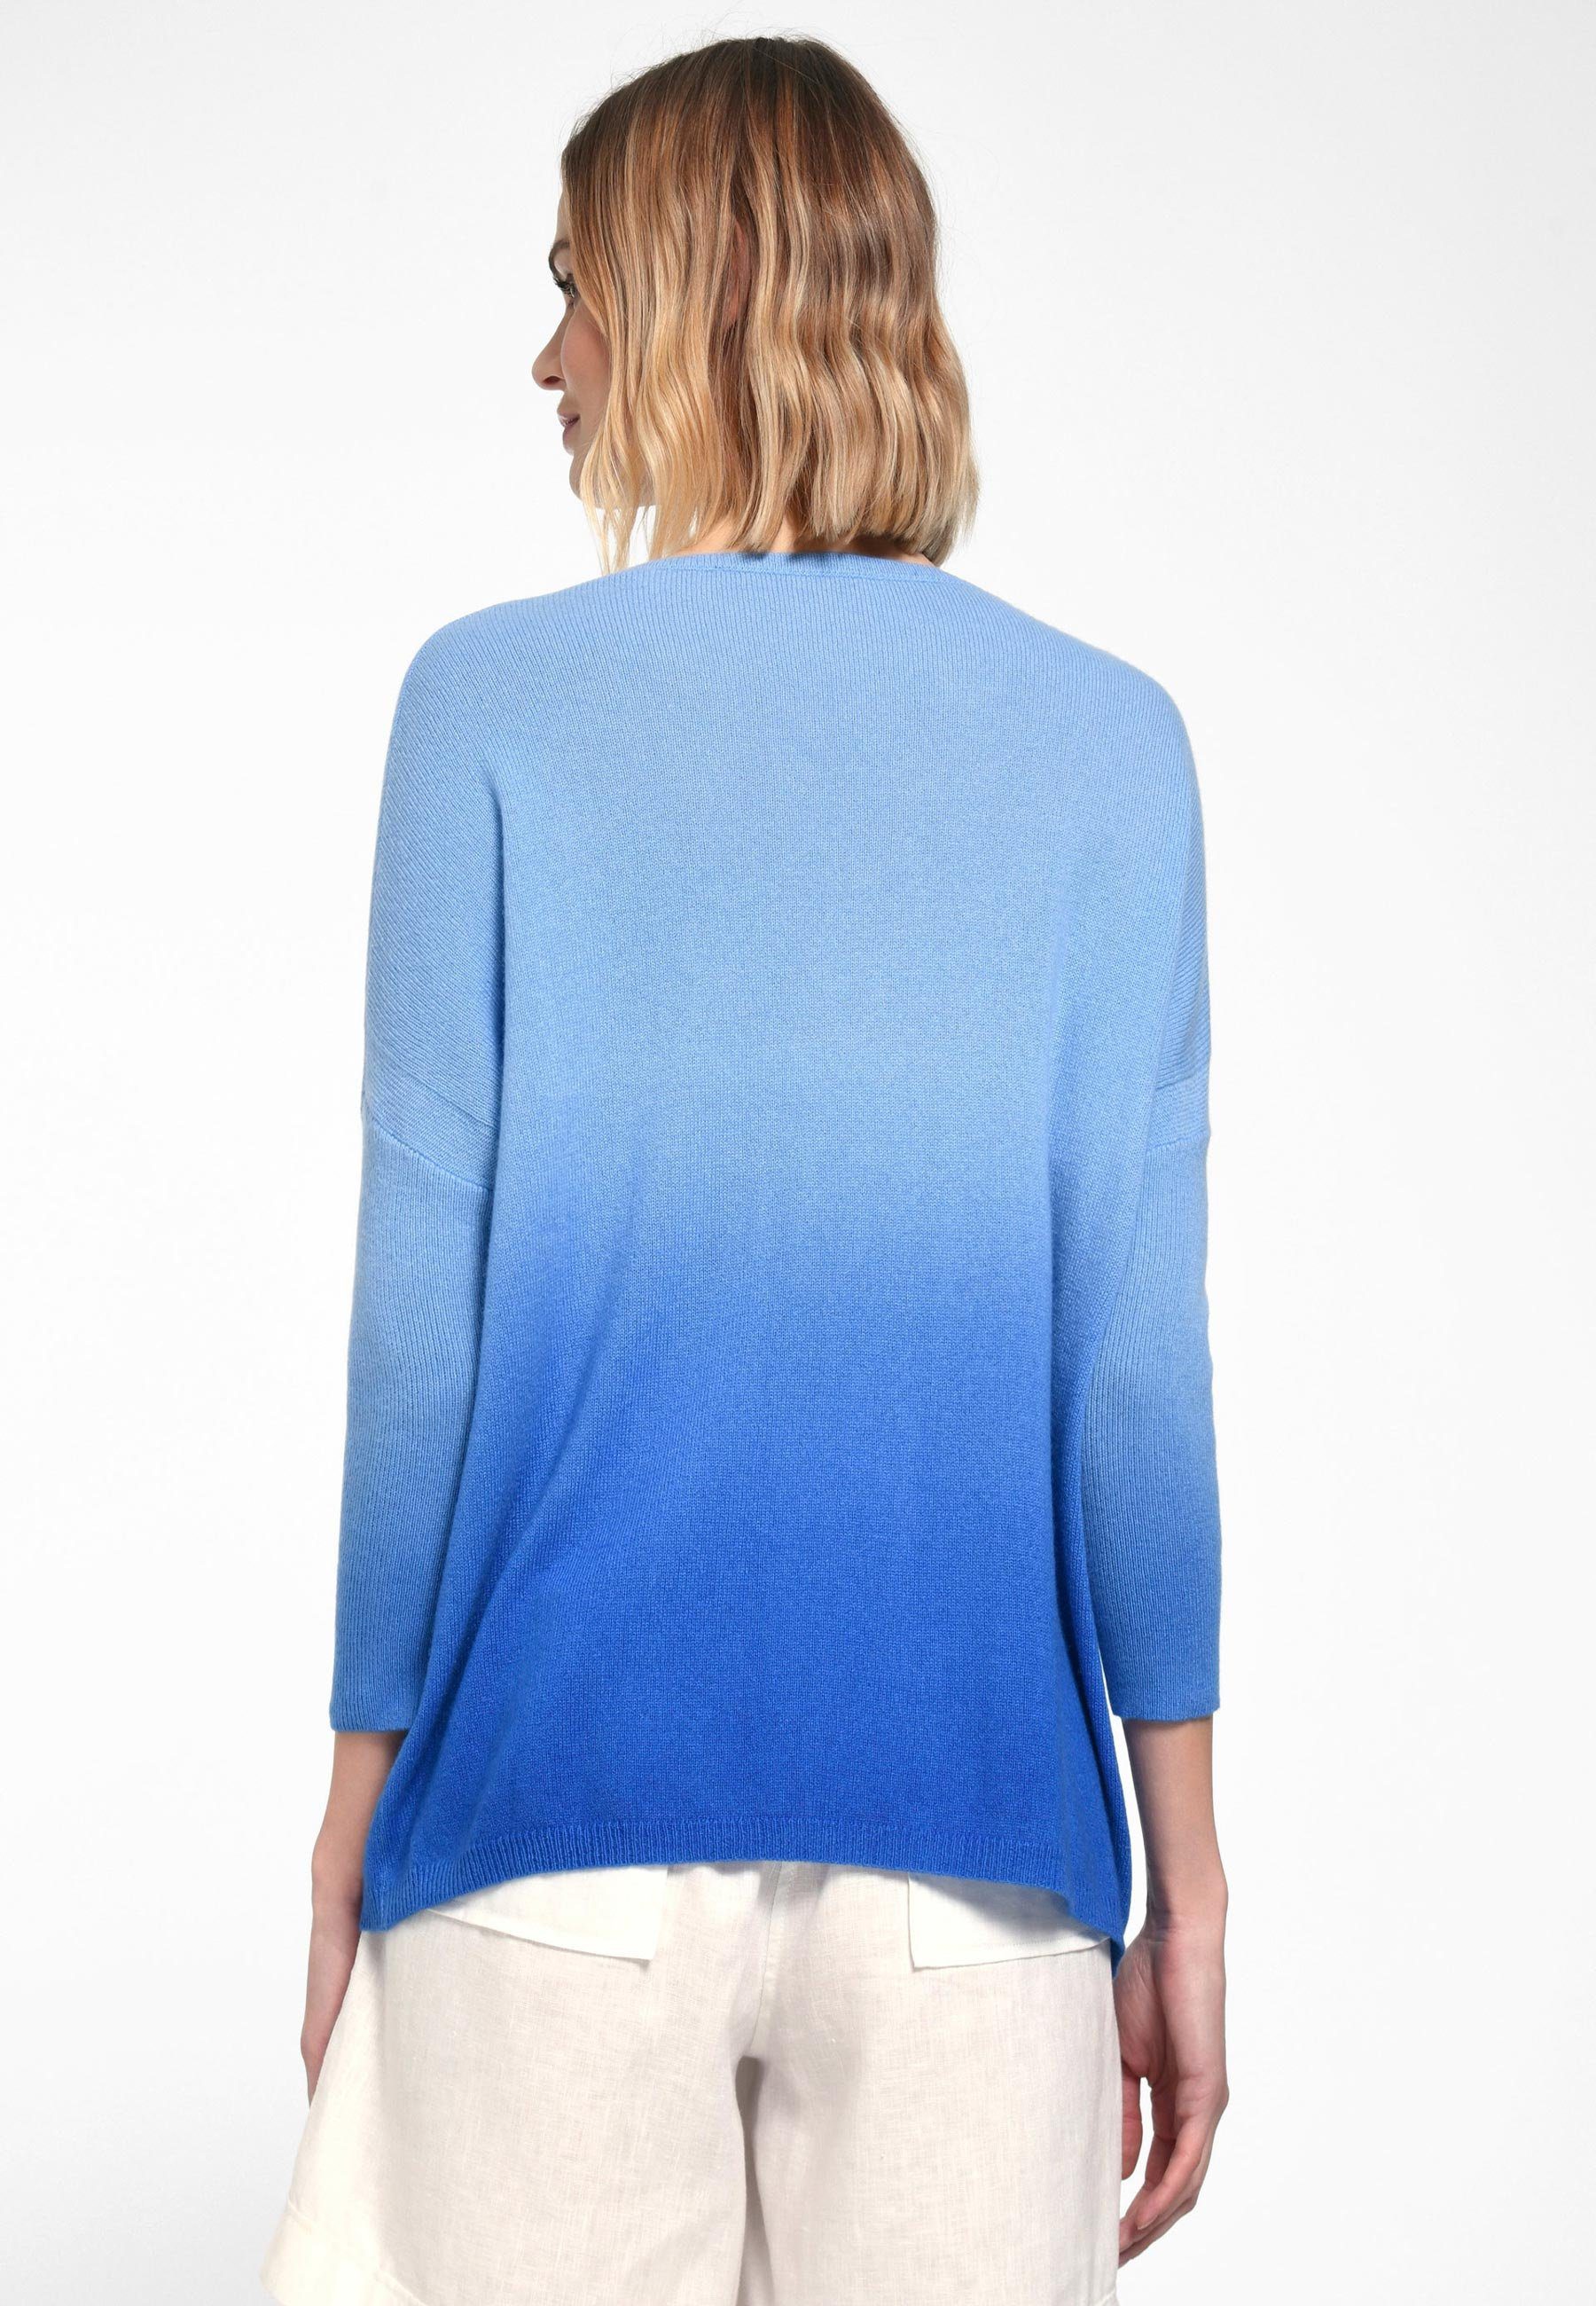 Wool New blau include Strickpullover